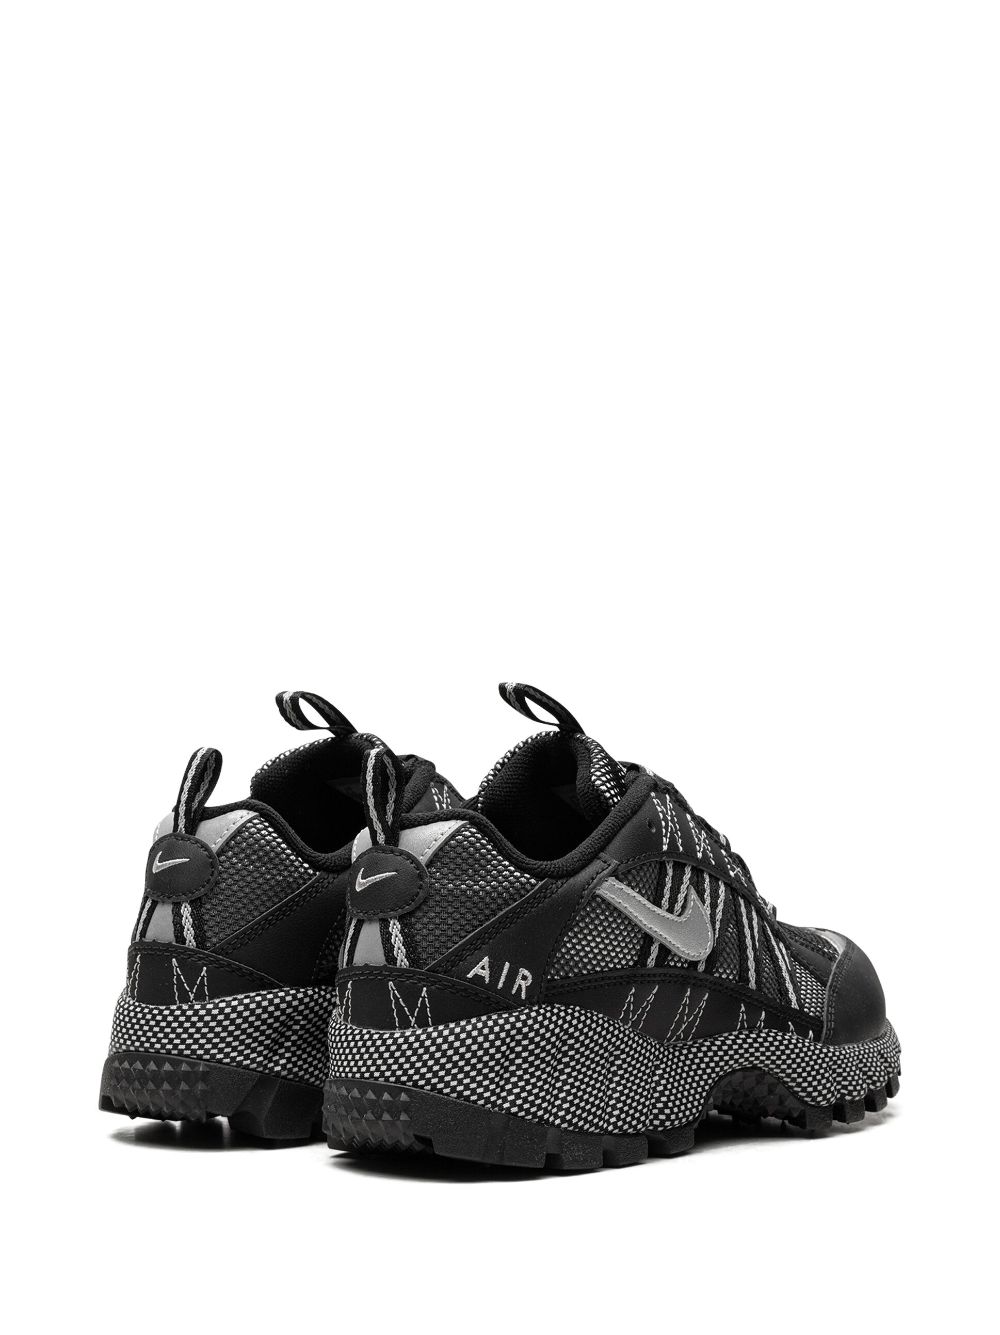 Shop Nike Air Humara "black/metallic Silver" Sneakers